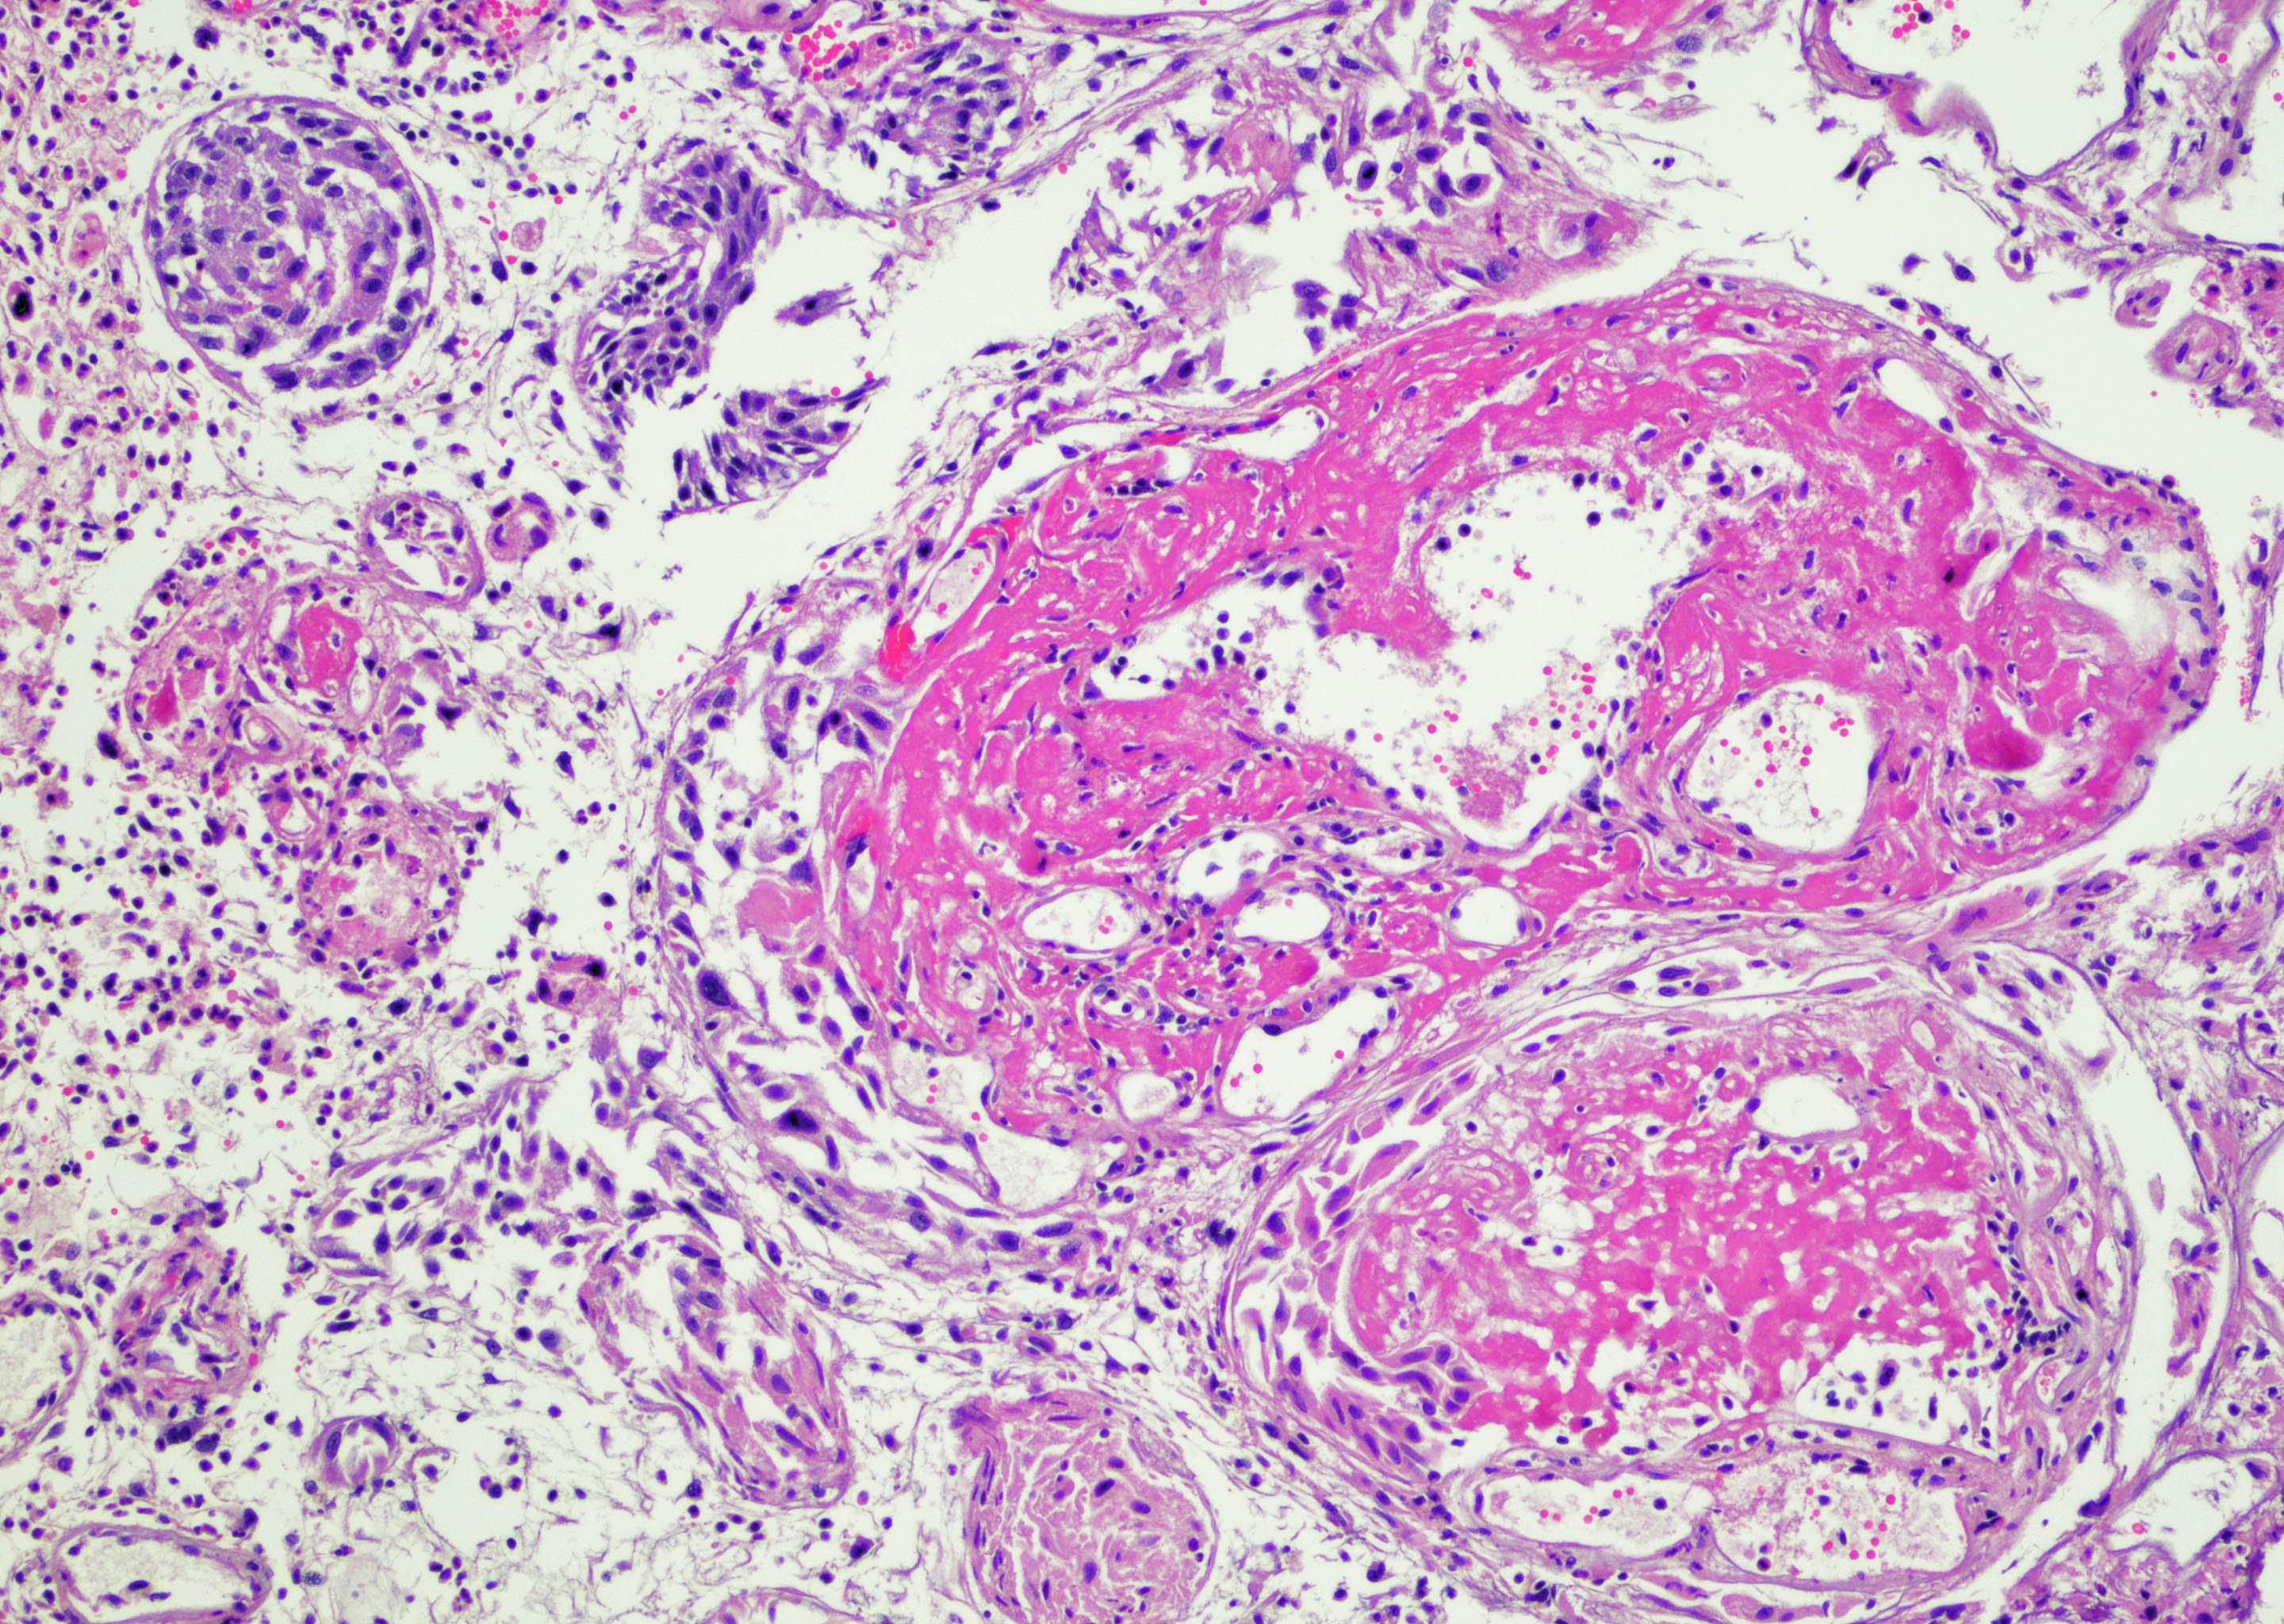 Urothelial cells enclosing fibrin